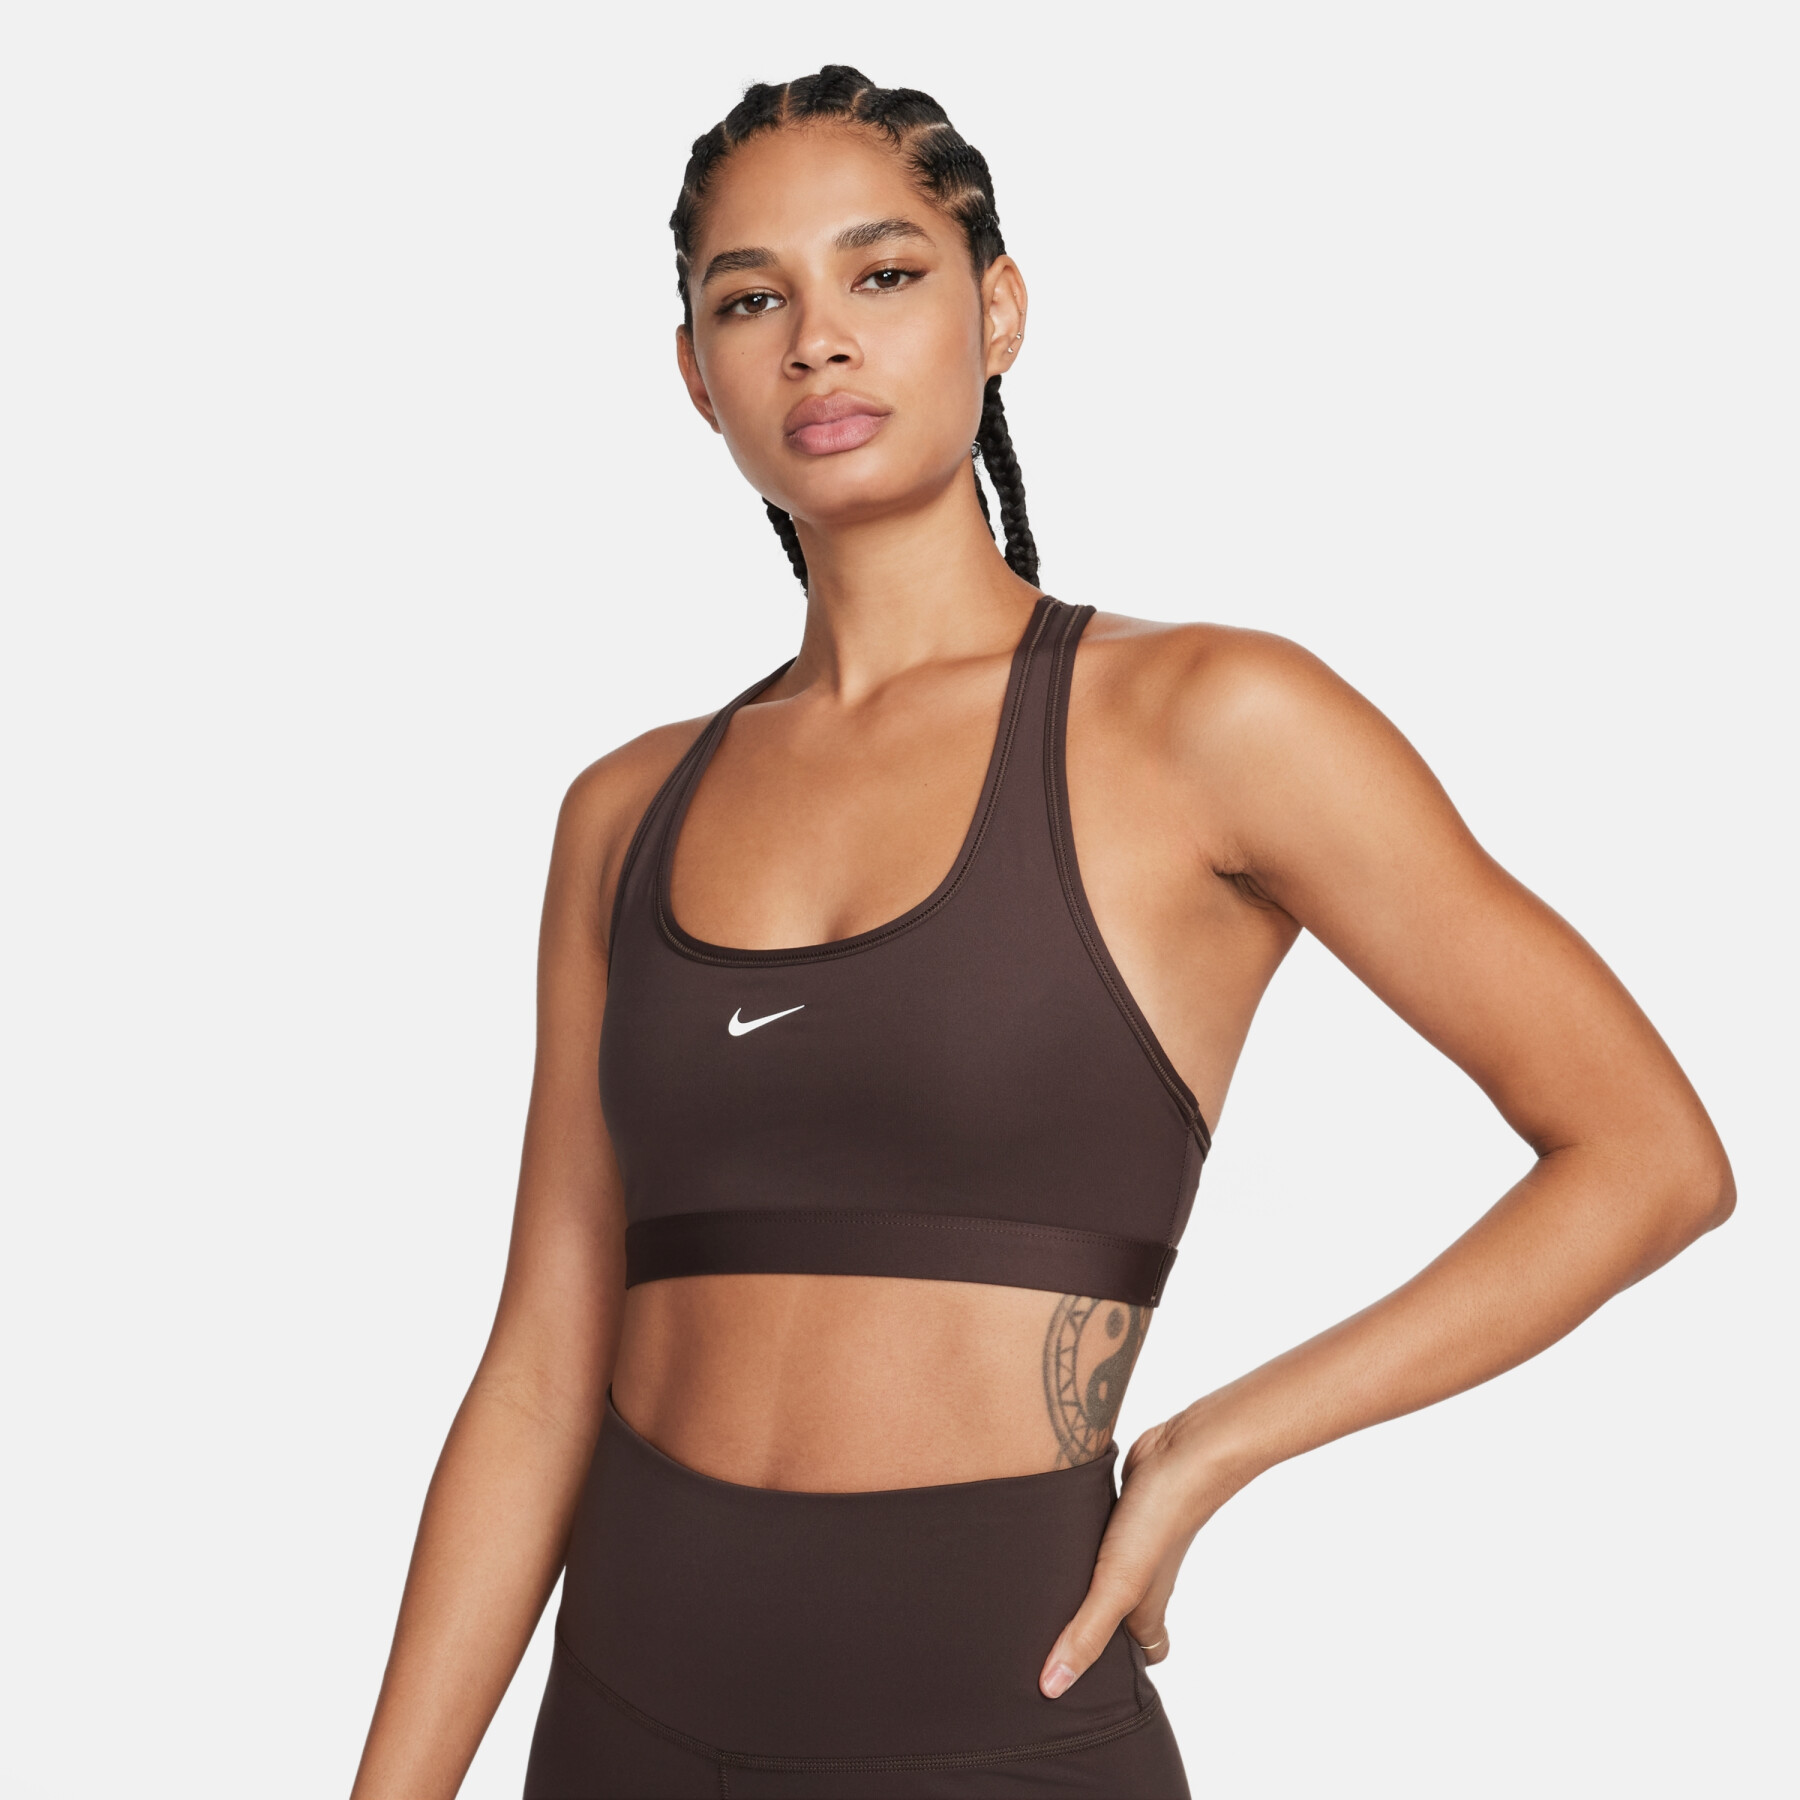 Women's unpadded bra Nike Swoosh High Support